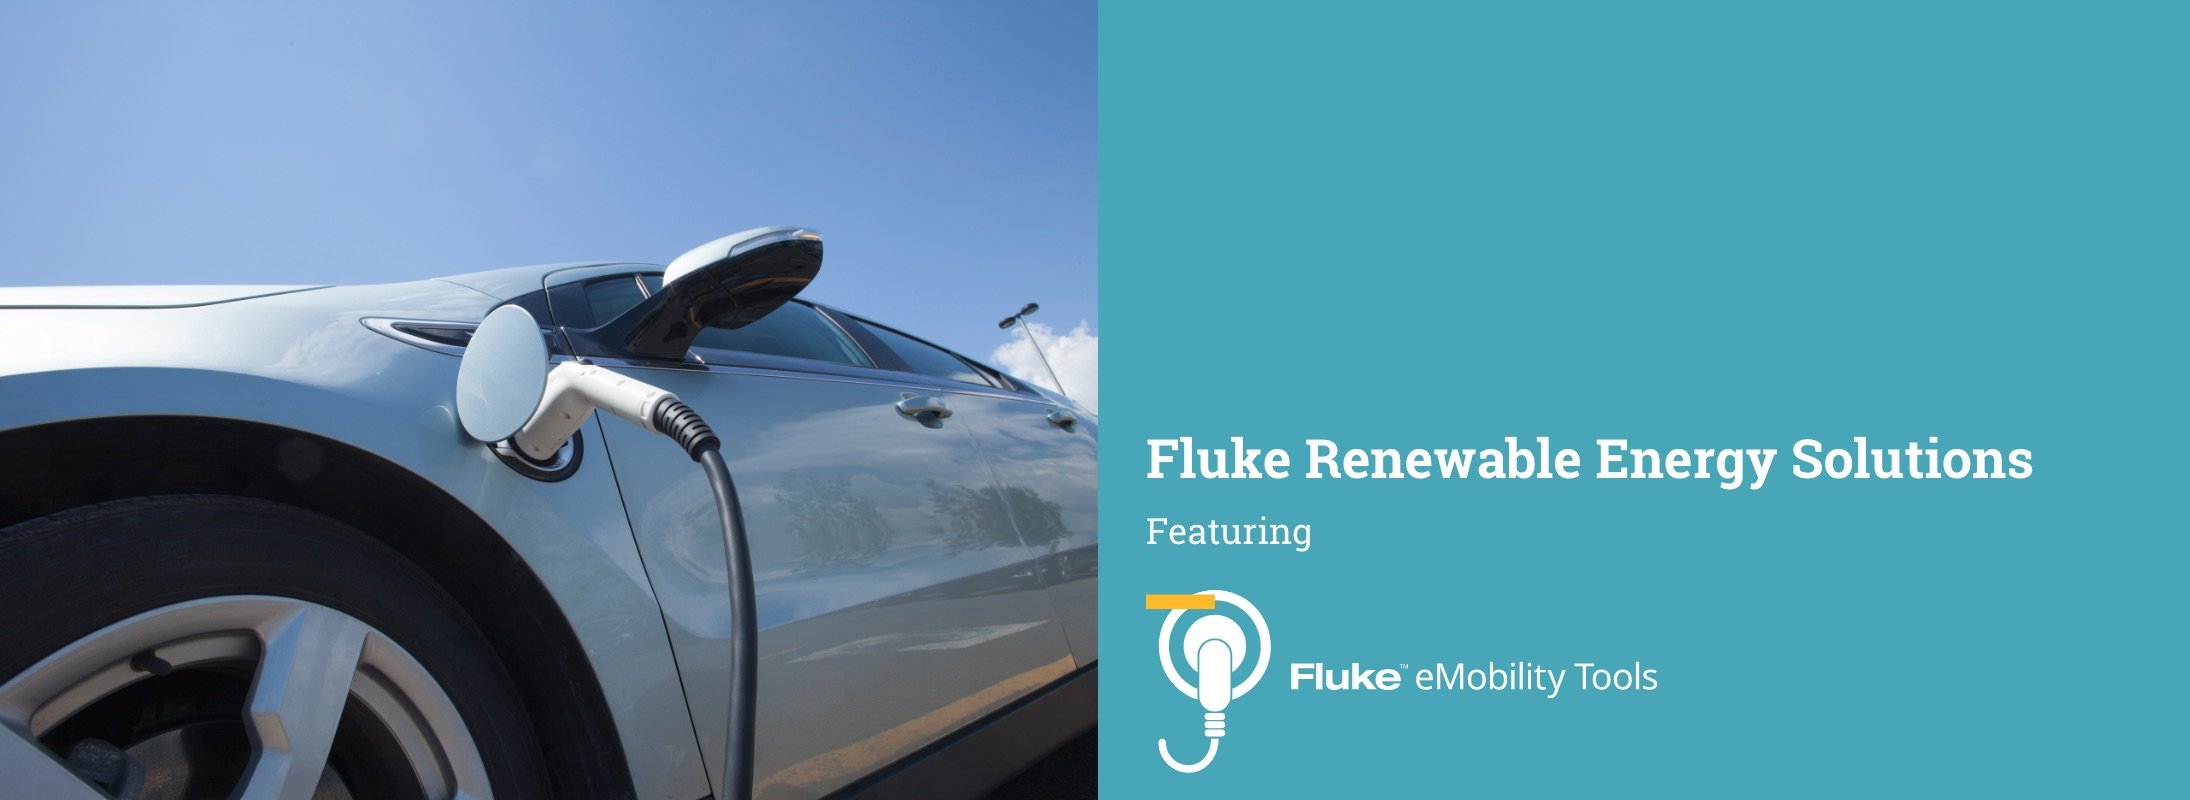 Fluke eMobility and EVSE solutions